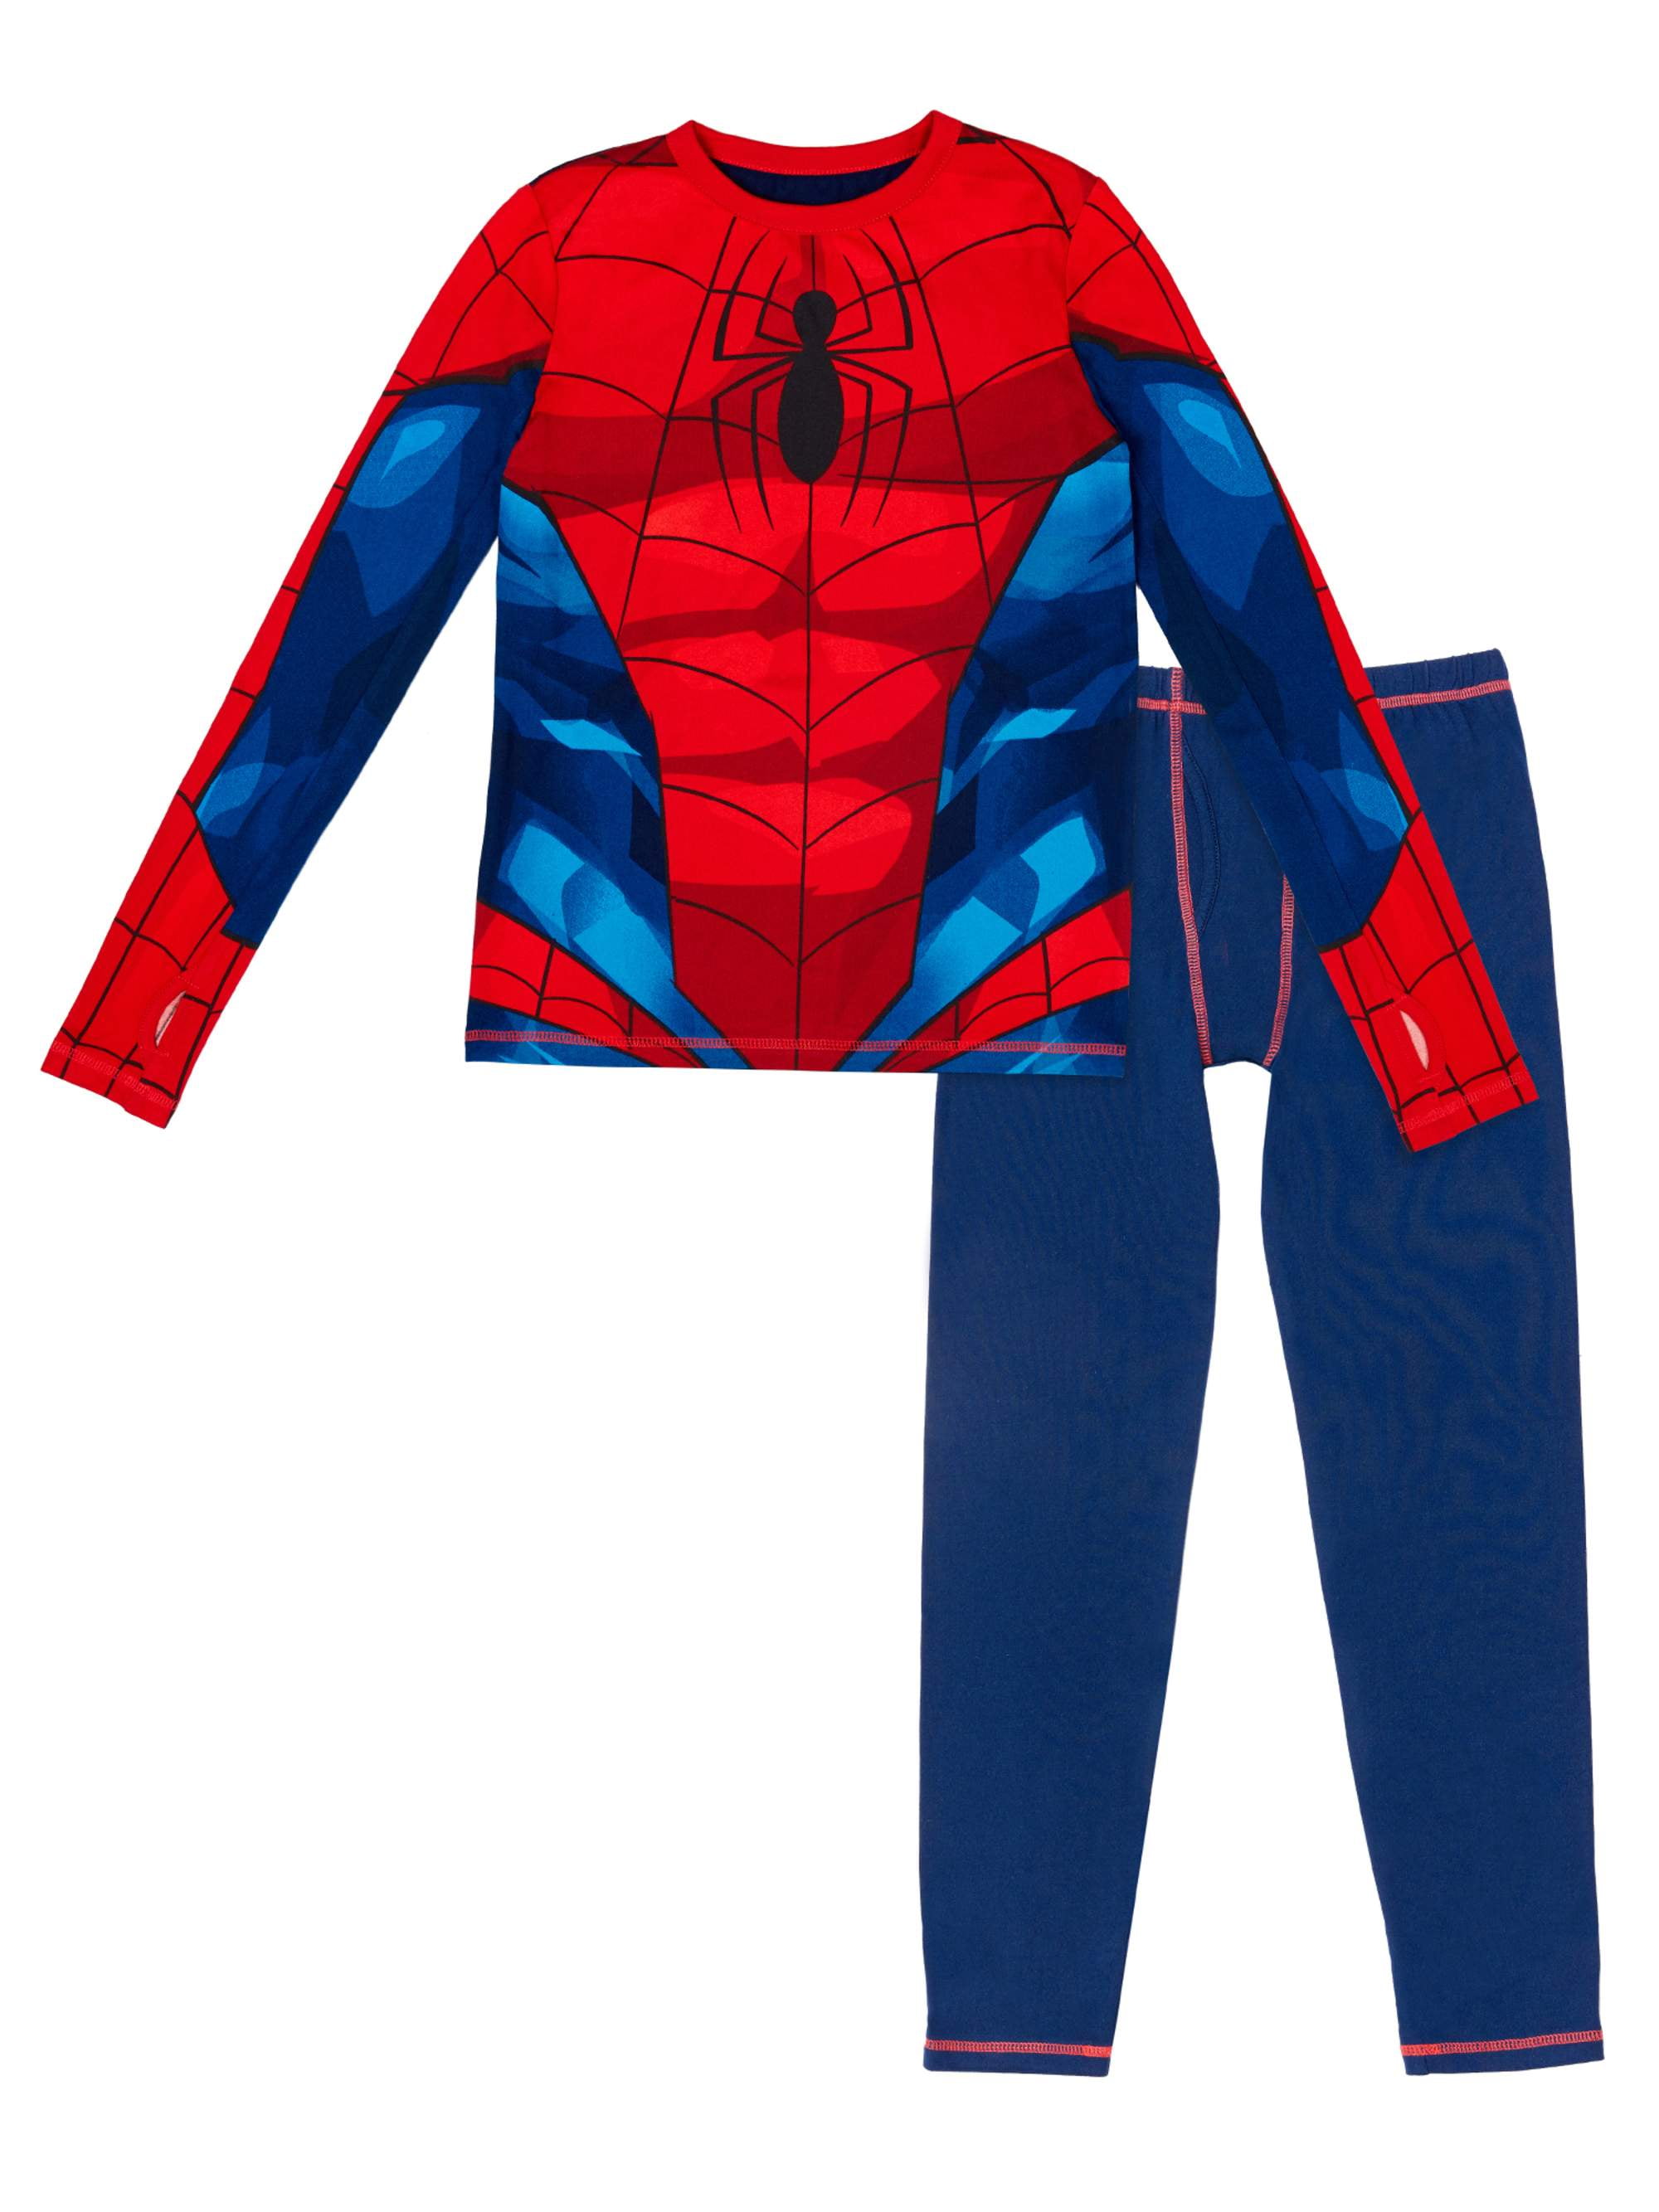 Boys Small 6-7 Spiderman Pajamas Thermal Underwear Baselayer Shirt Pants PJs 